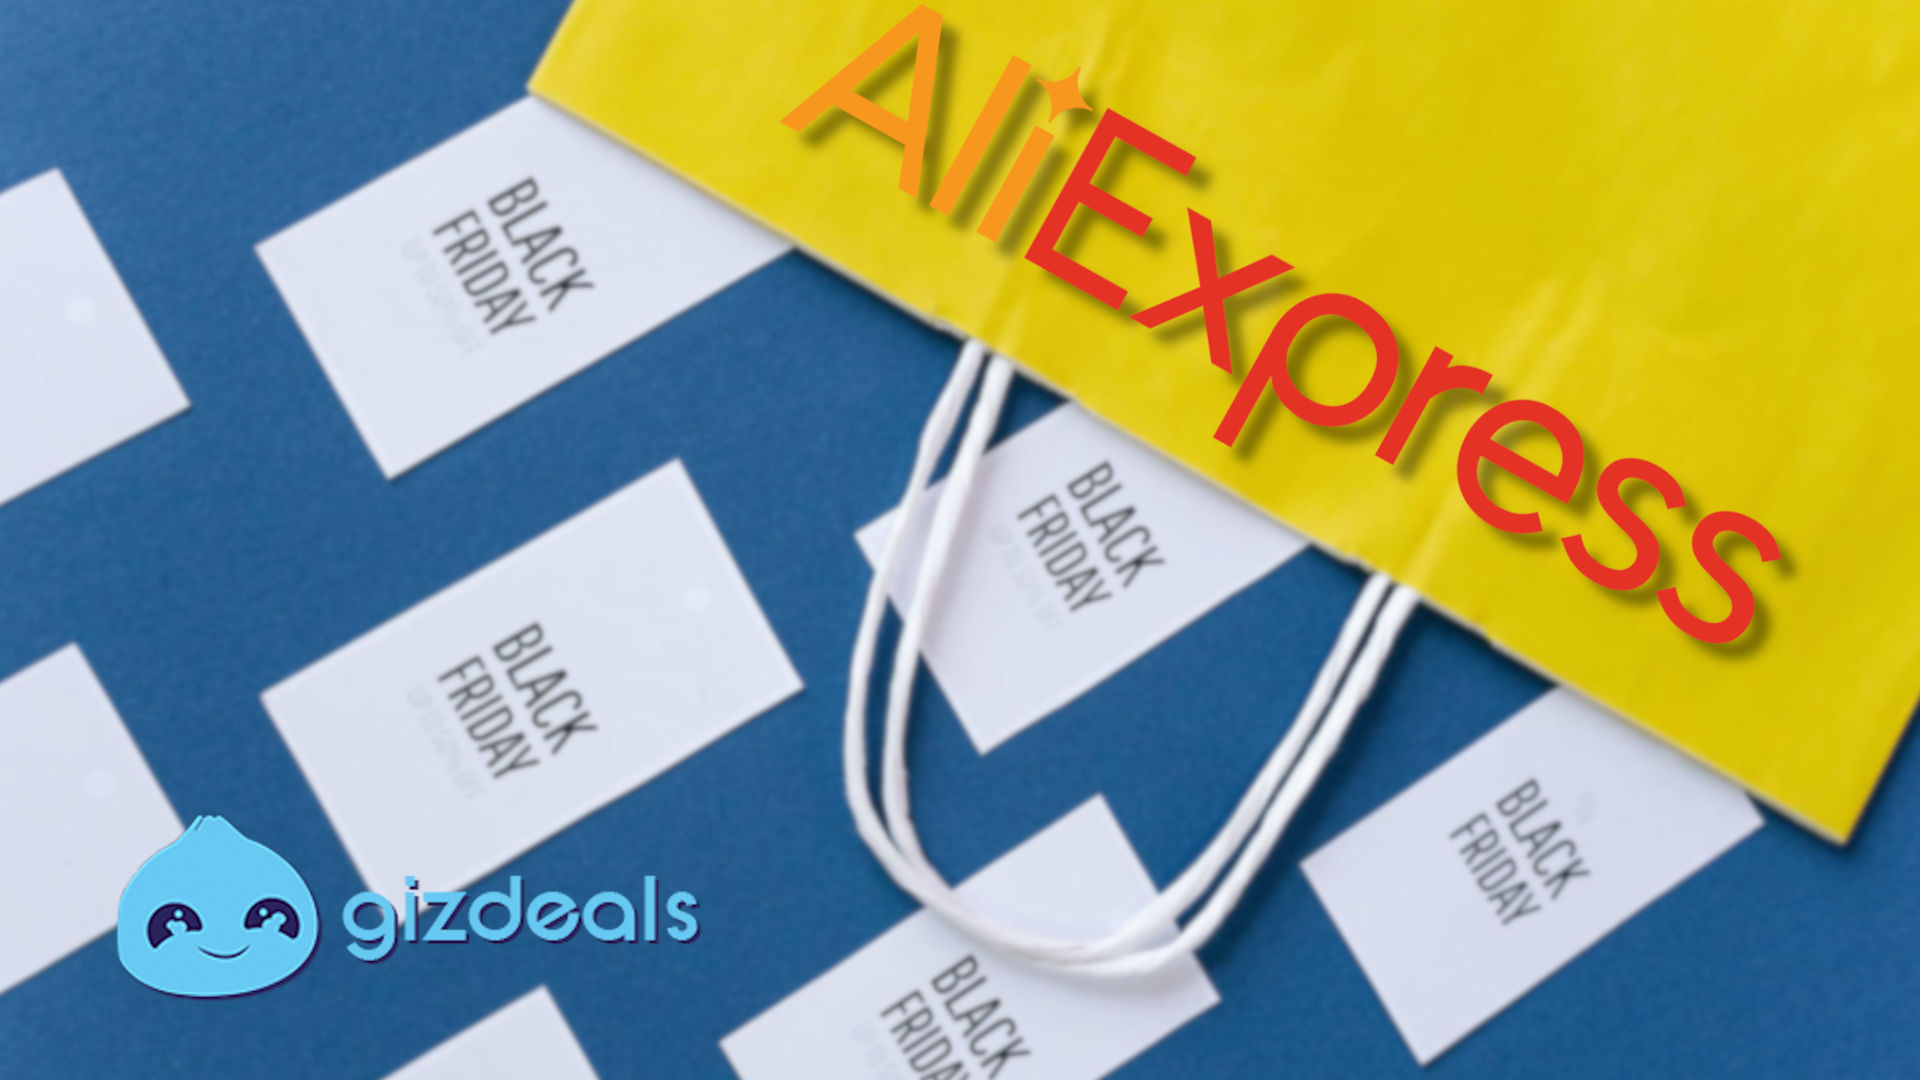 Aliexpress Promo Code August 2021